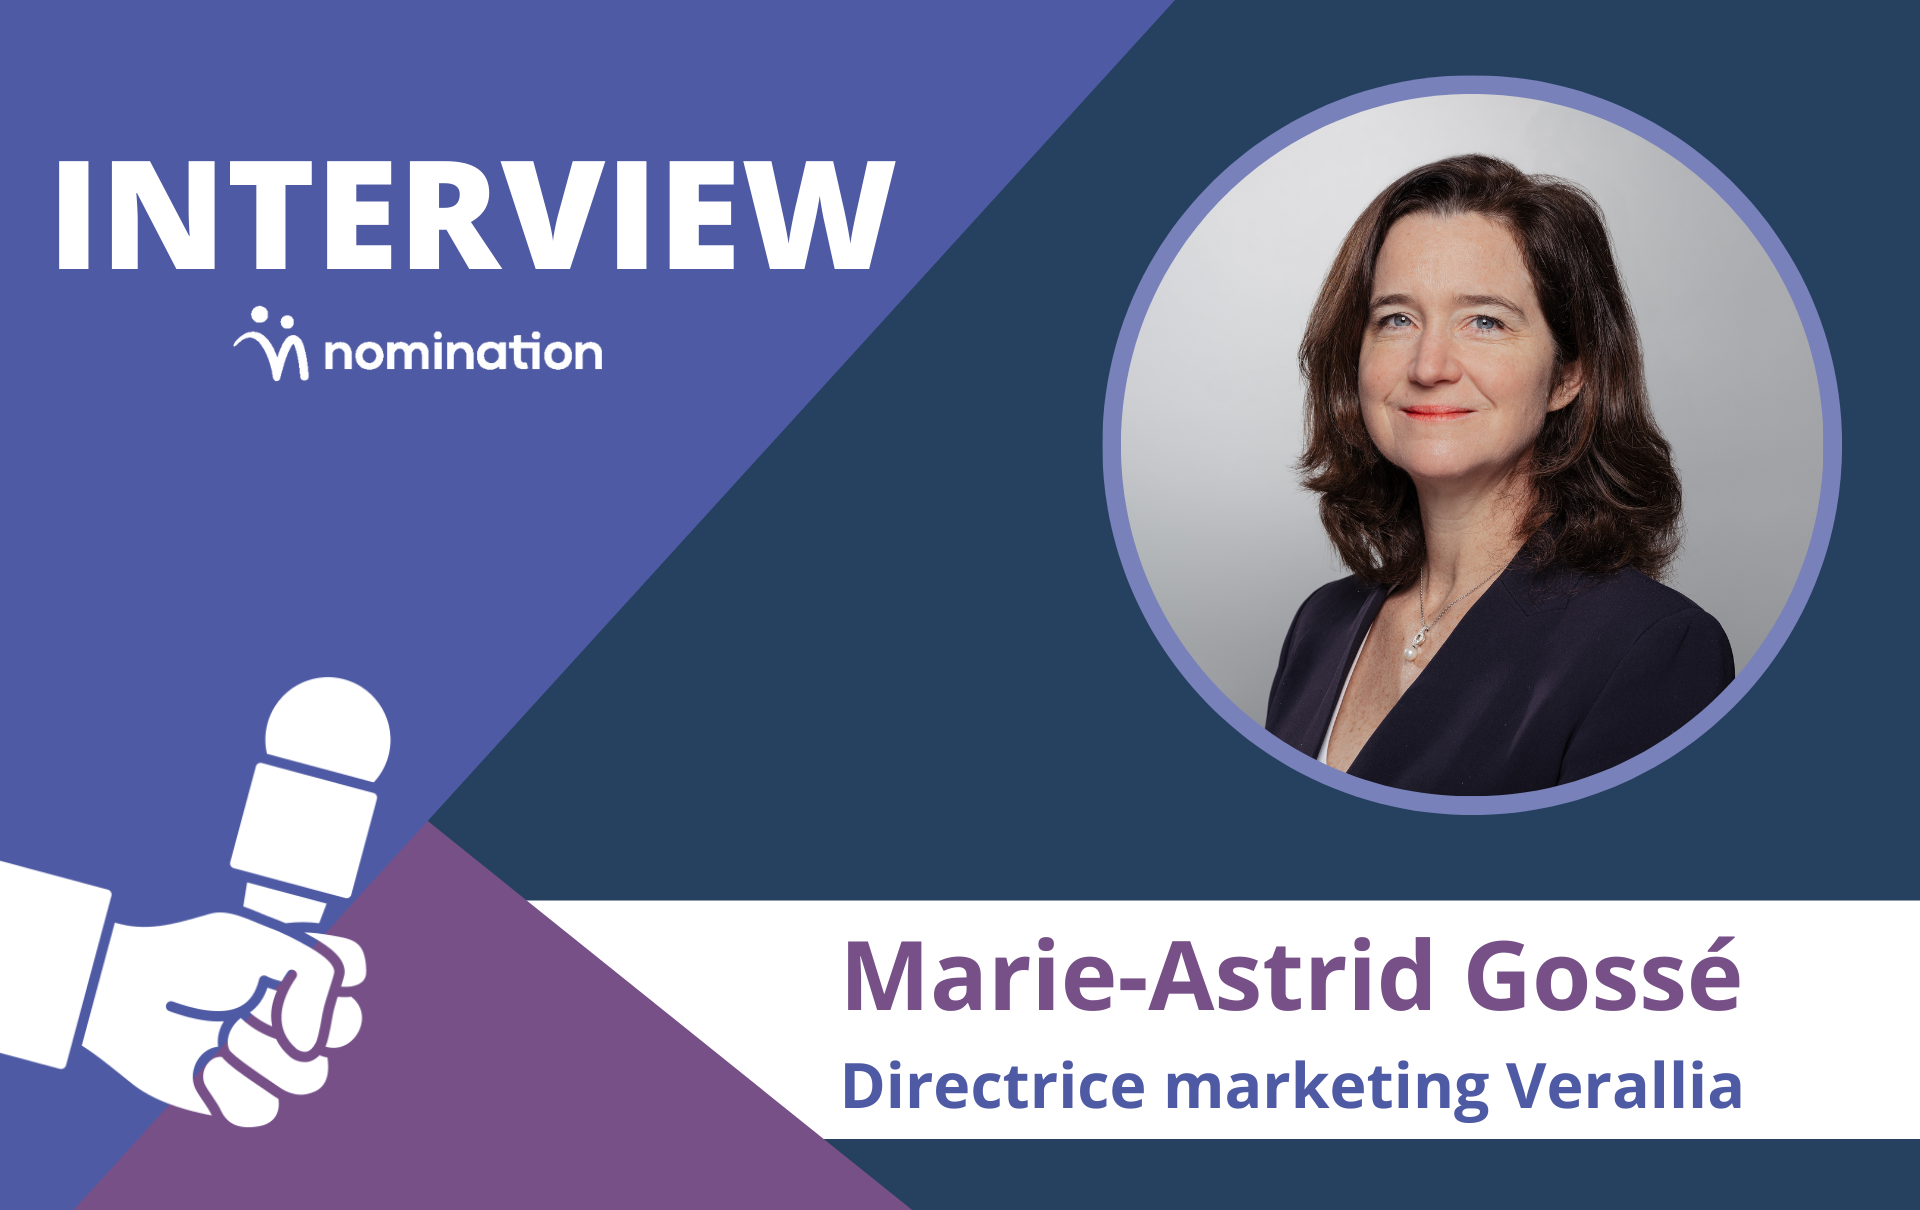 Marie-Astrid Gossé, directrice marketing du groupe Verallia